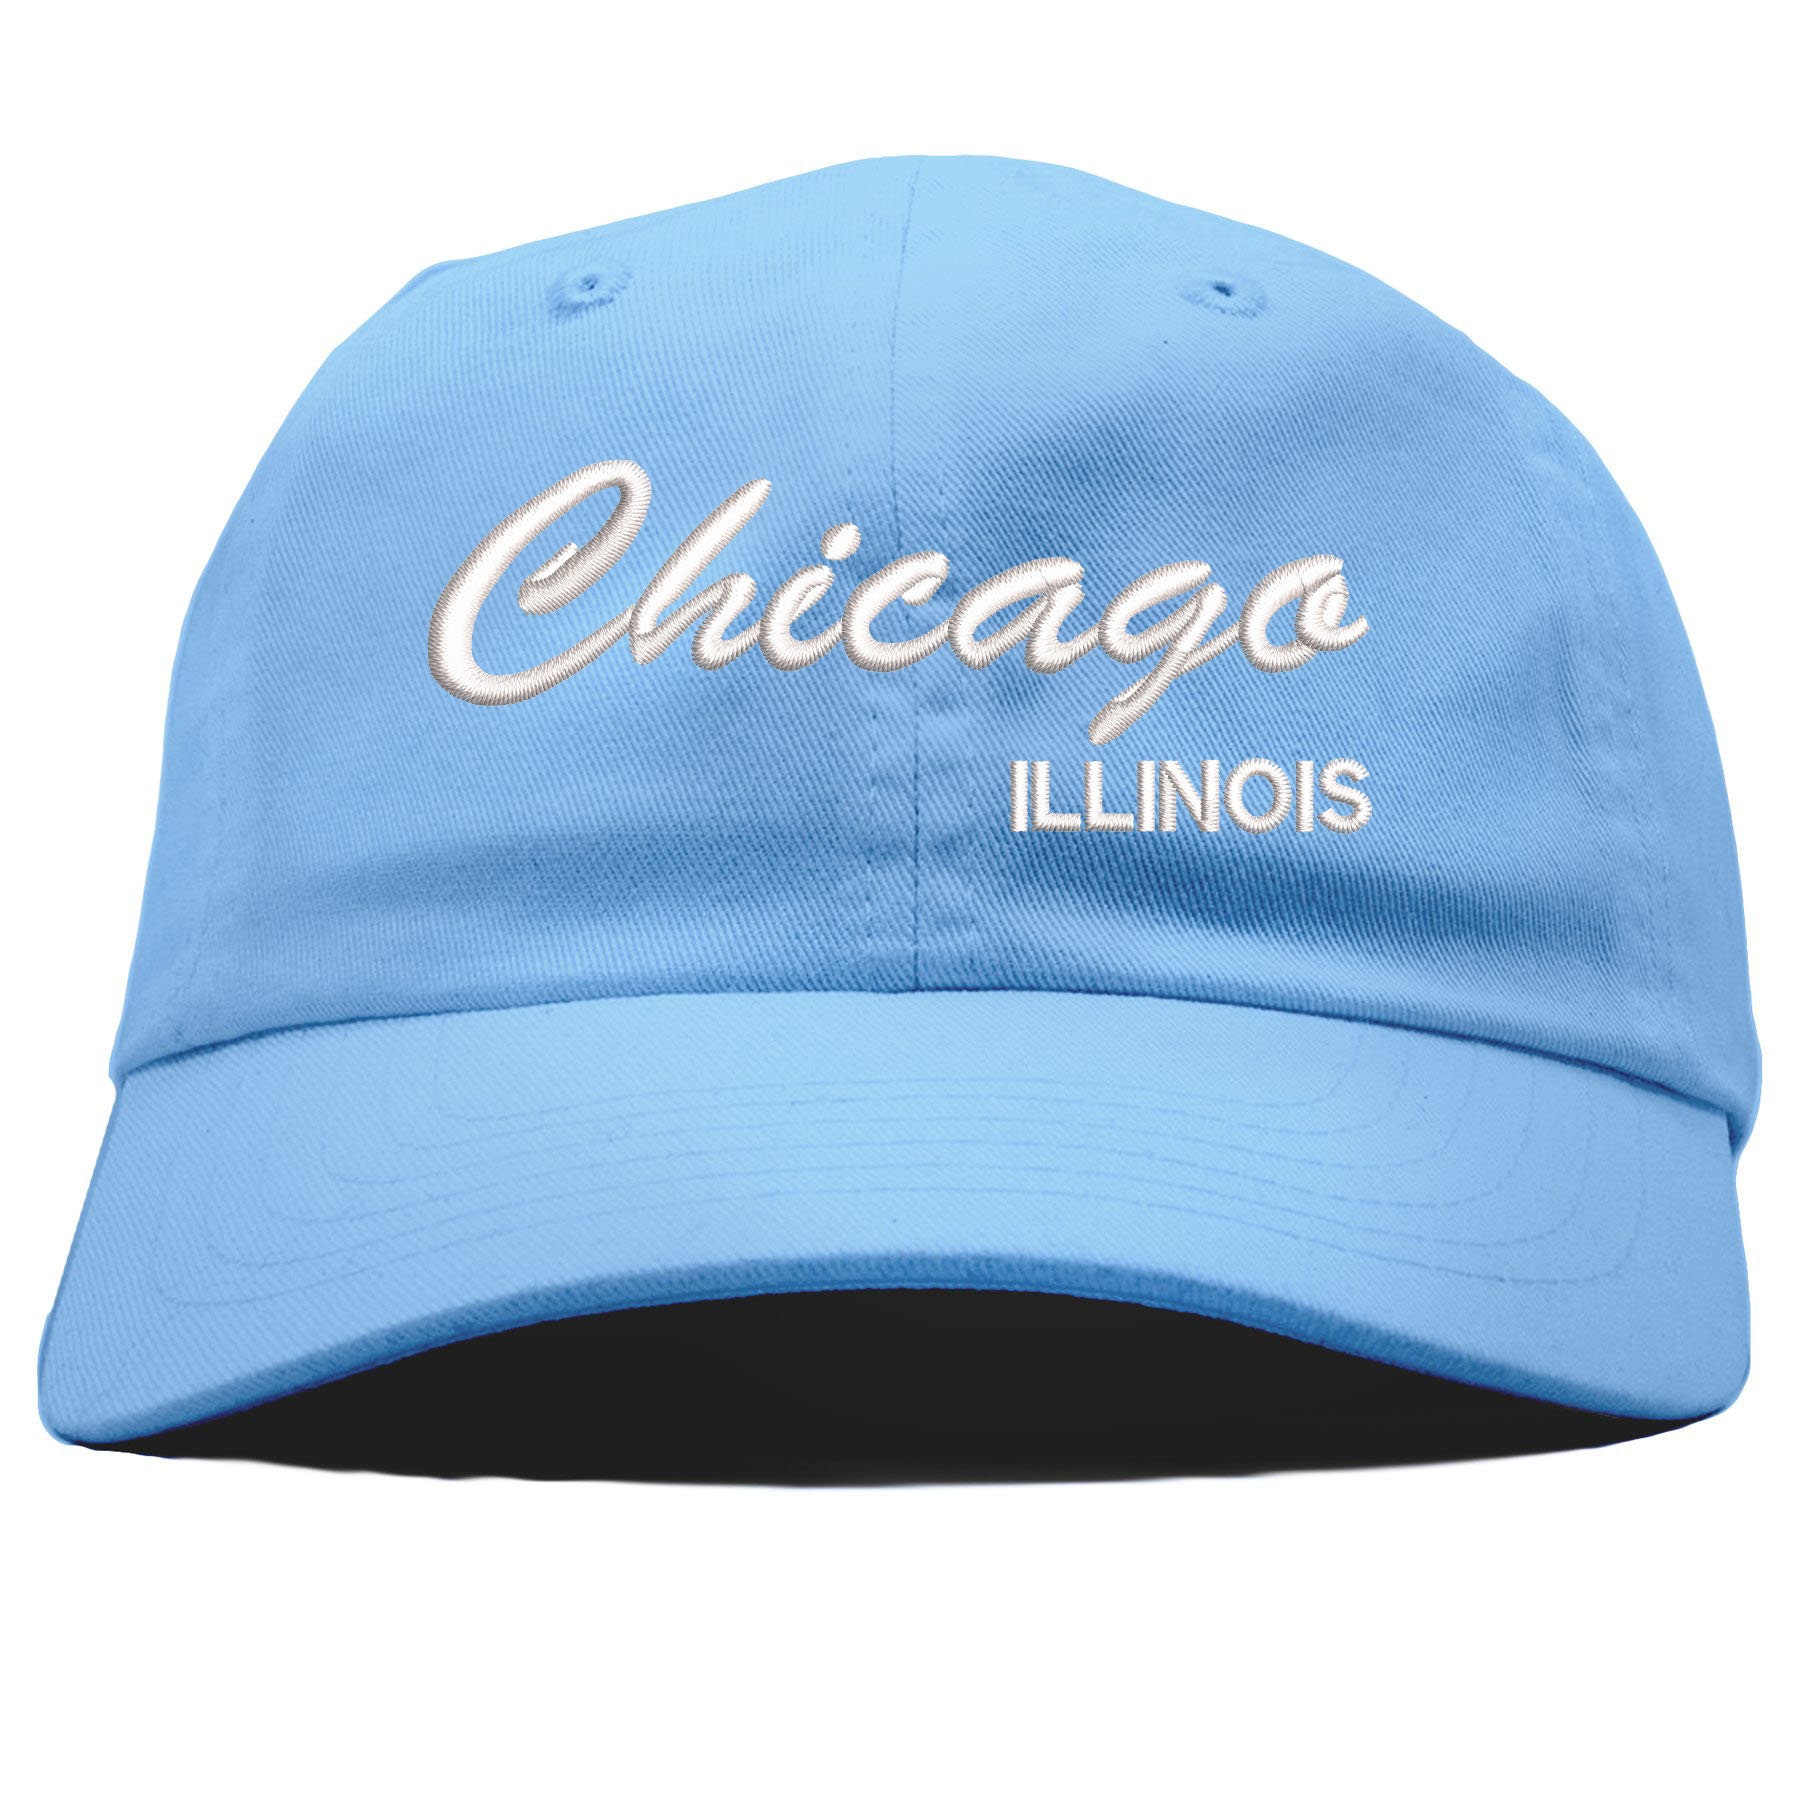 Chicago in script embroidery on light blue Hat Cap 100% polyester, OSFM  Adj. EUC